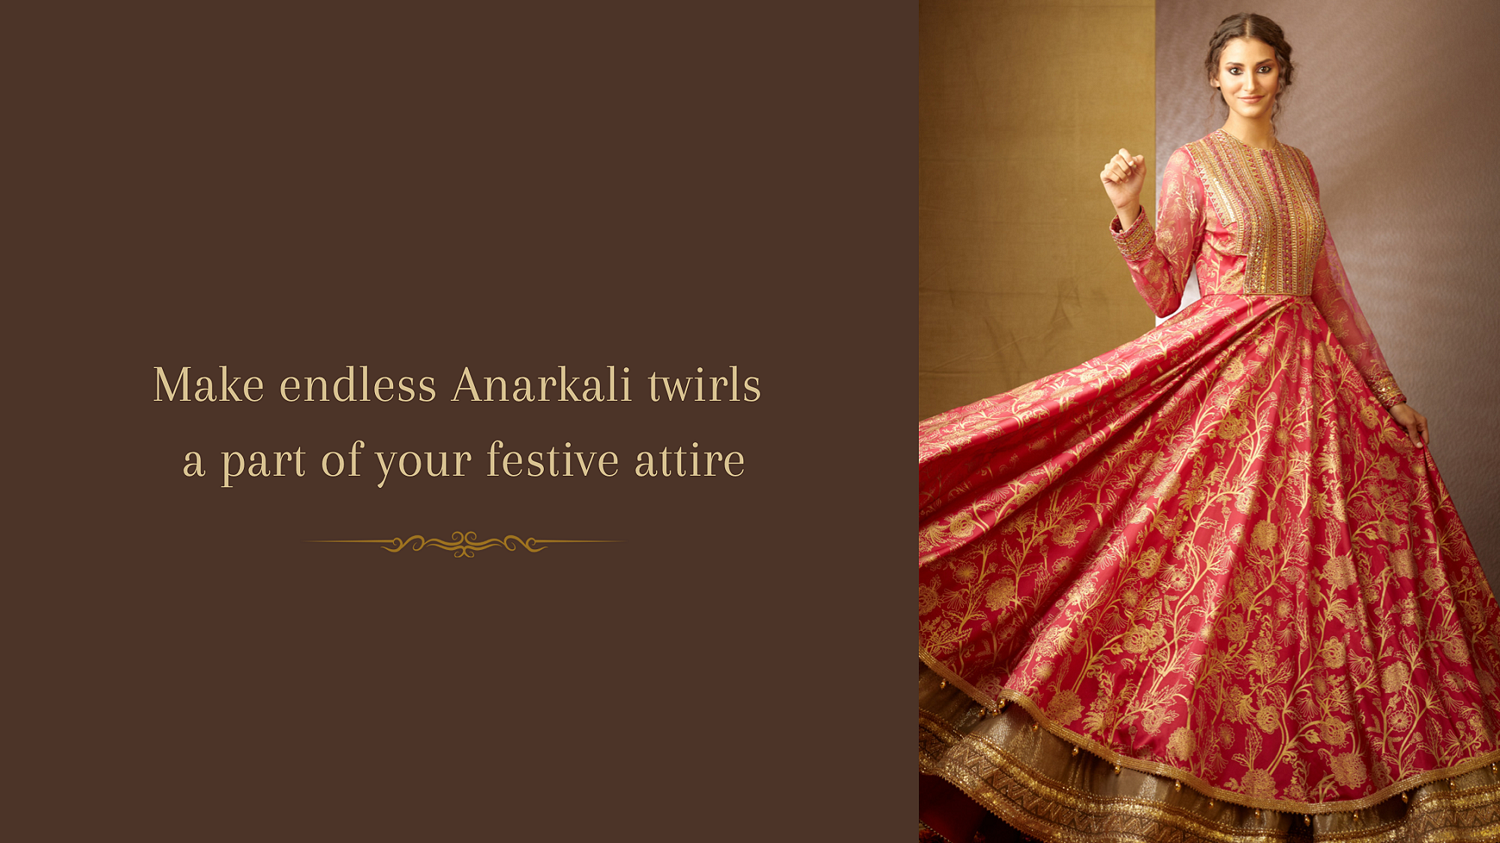 Make endless Anarkali twirls a part of your festive attire